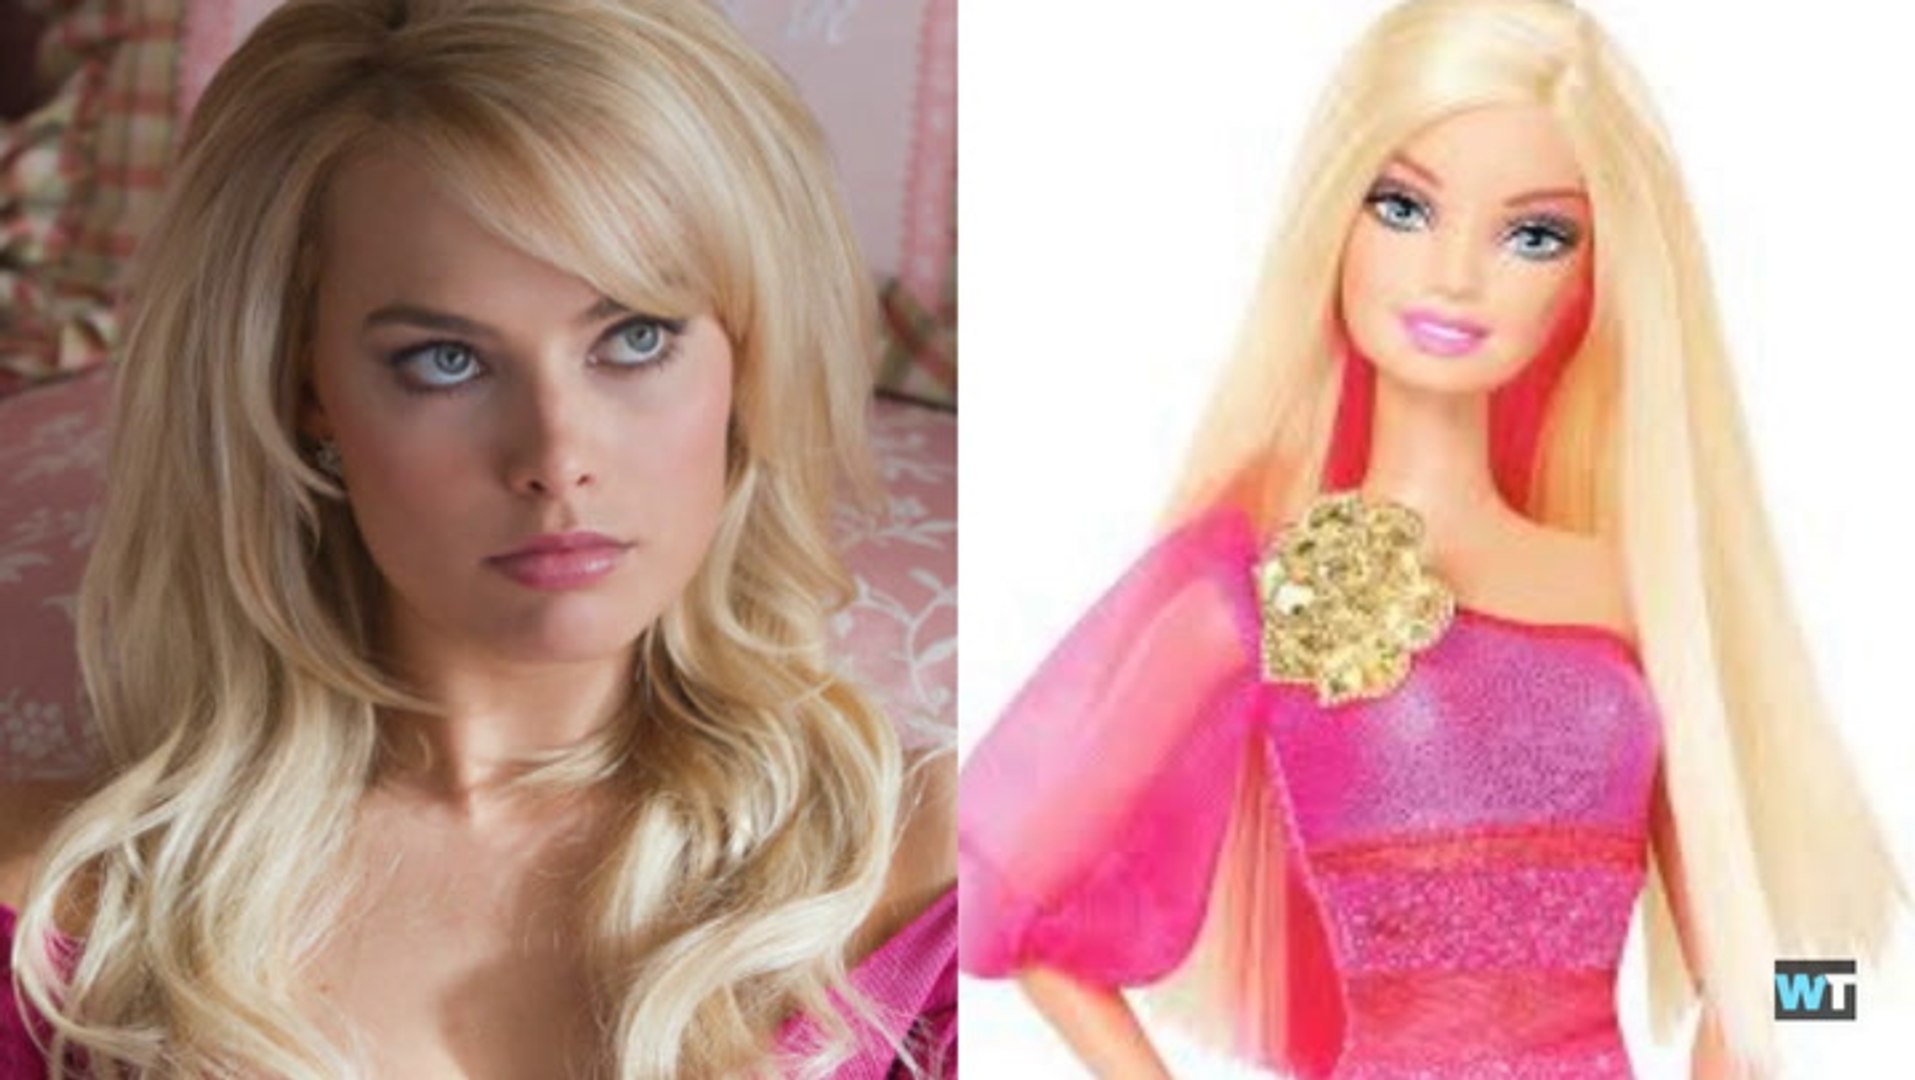 Play Barbie in 2020 Mattel Film 